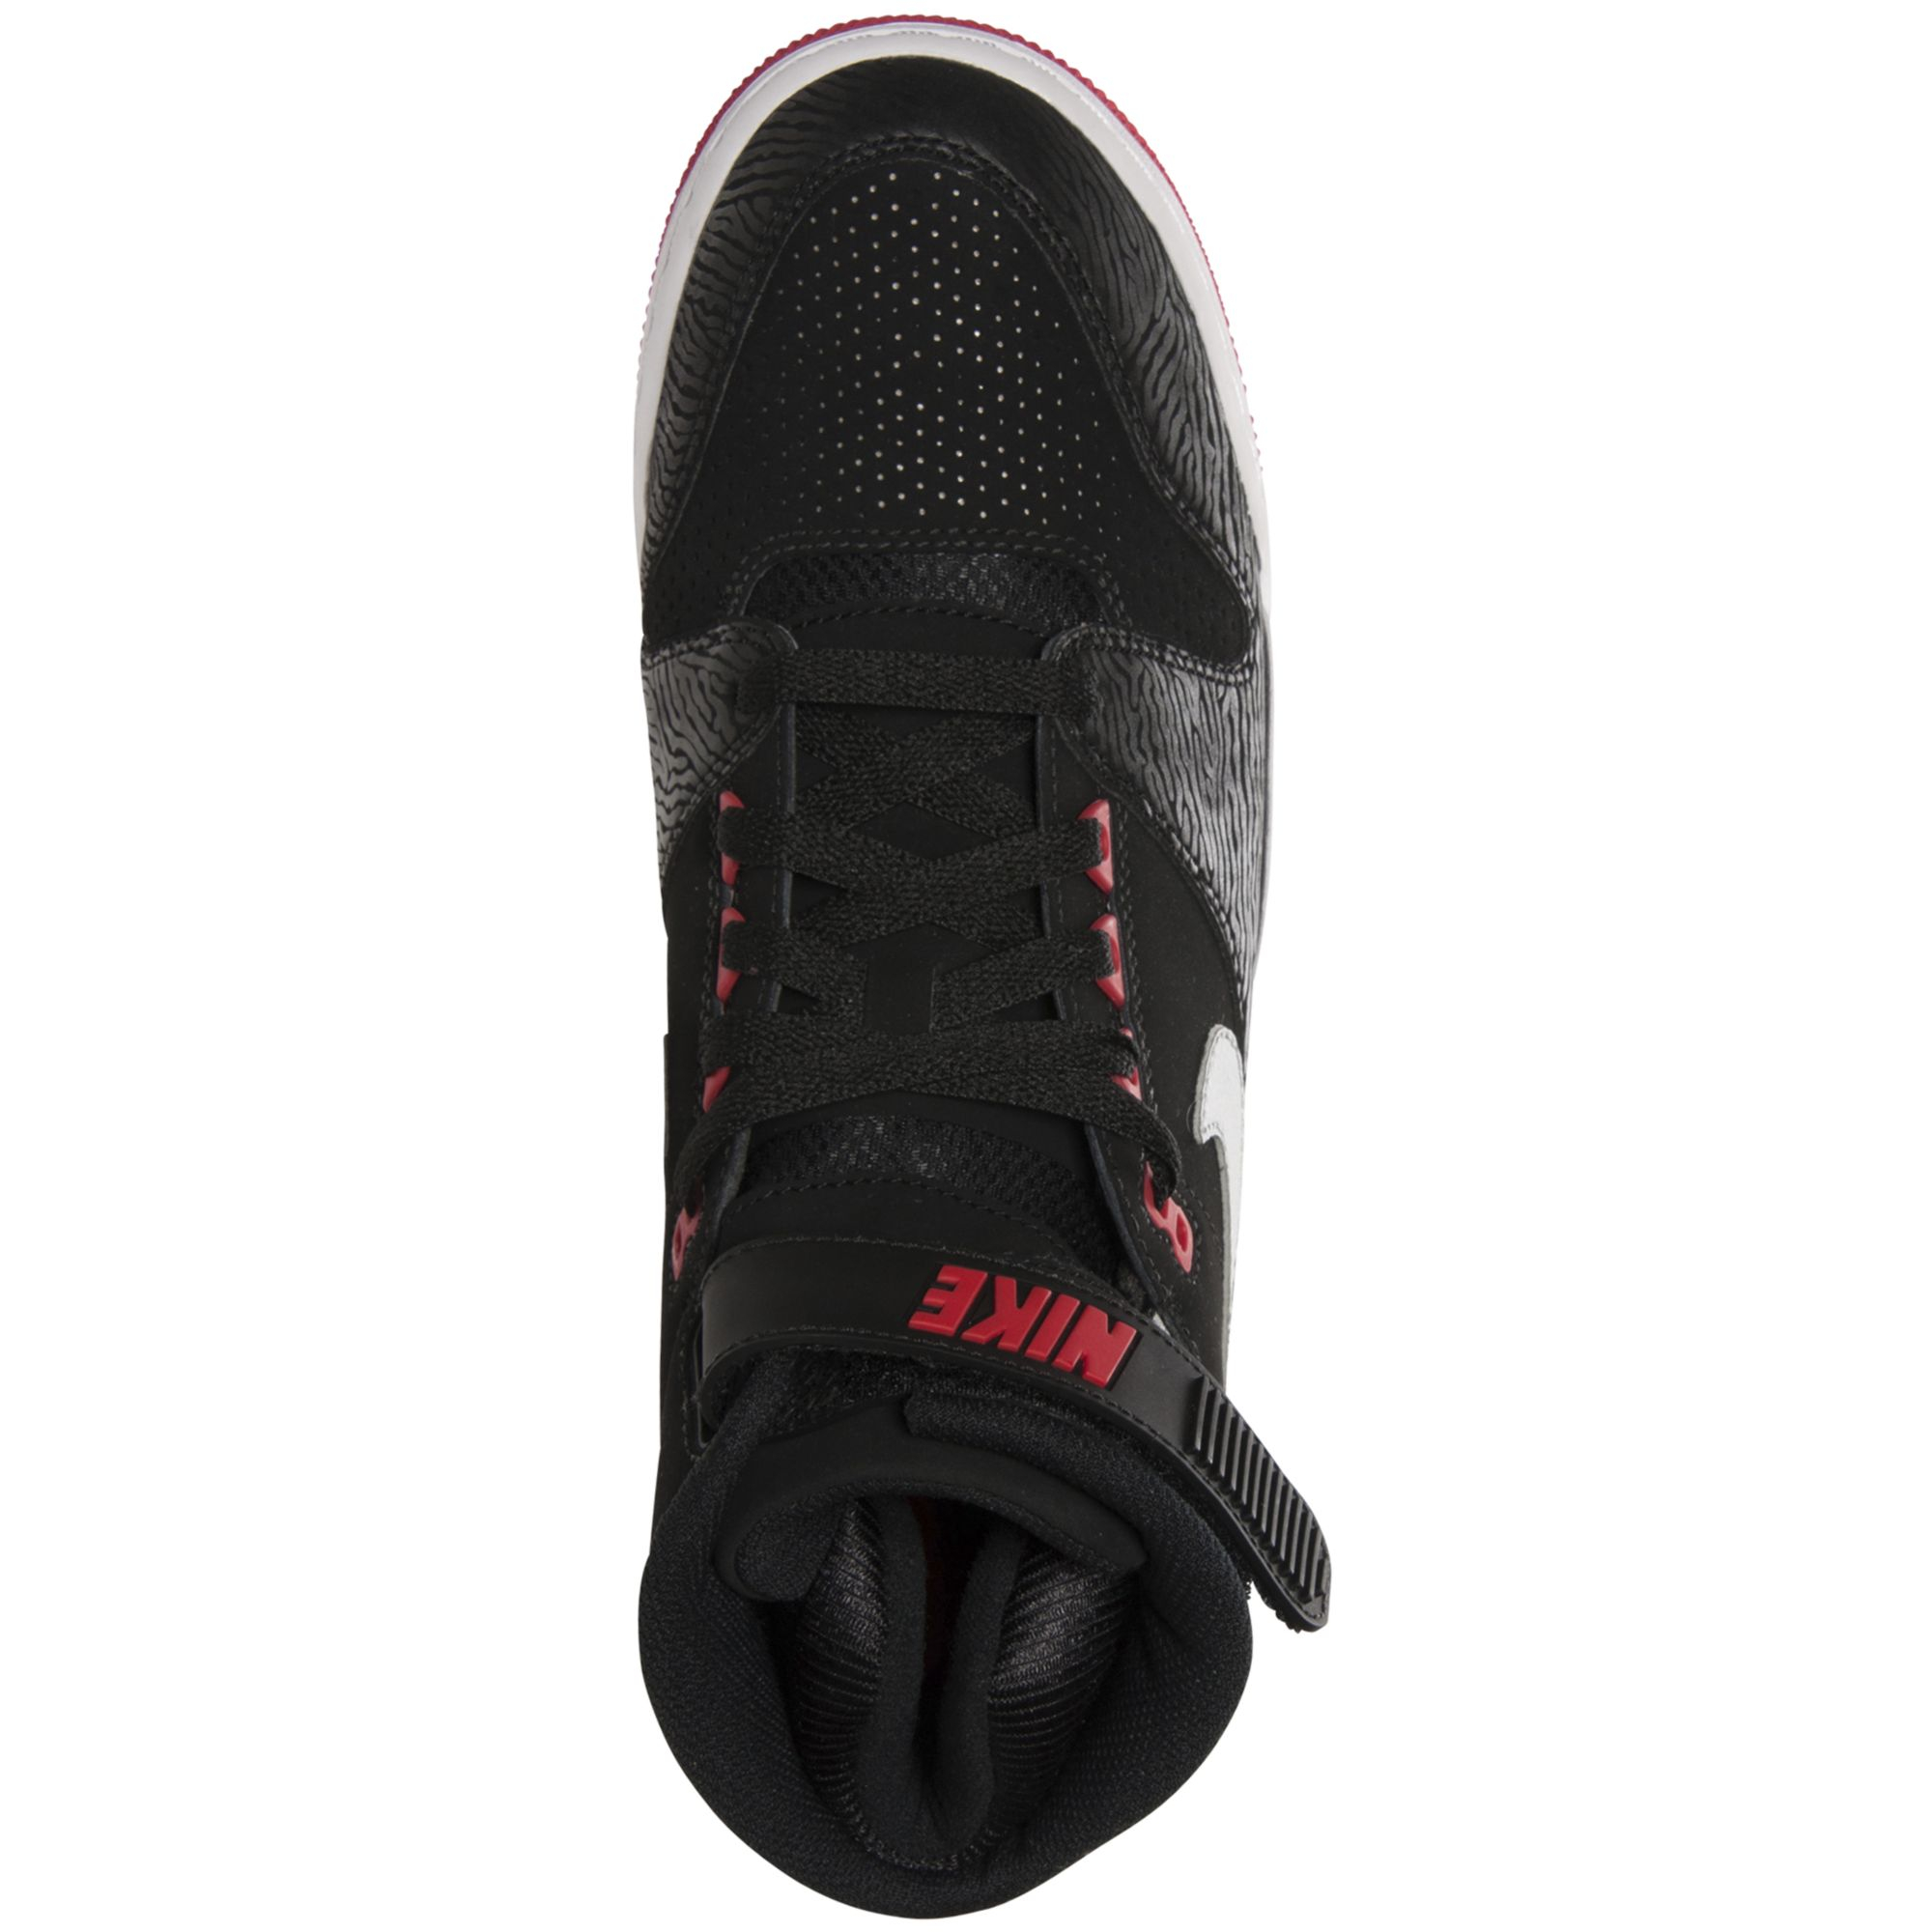 Nike Air Revolution Basketball Sneakers in Black/Silver/Red (Black) for Men  | Lyst